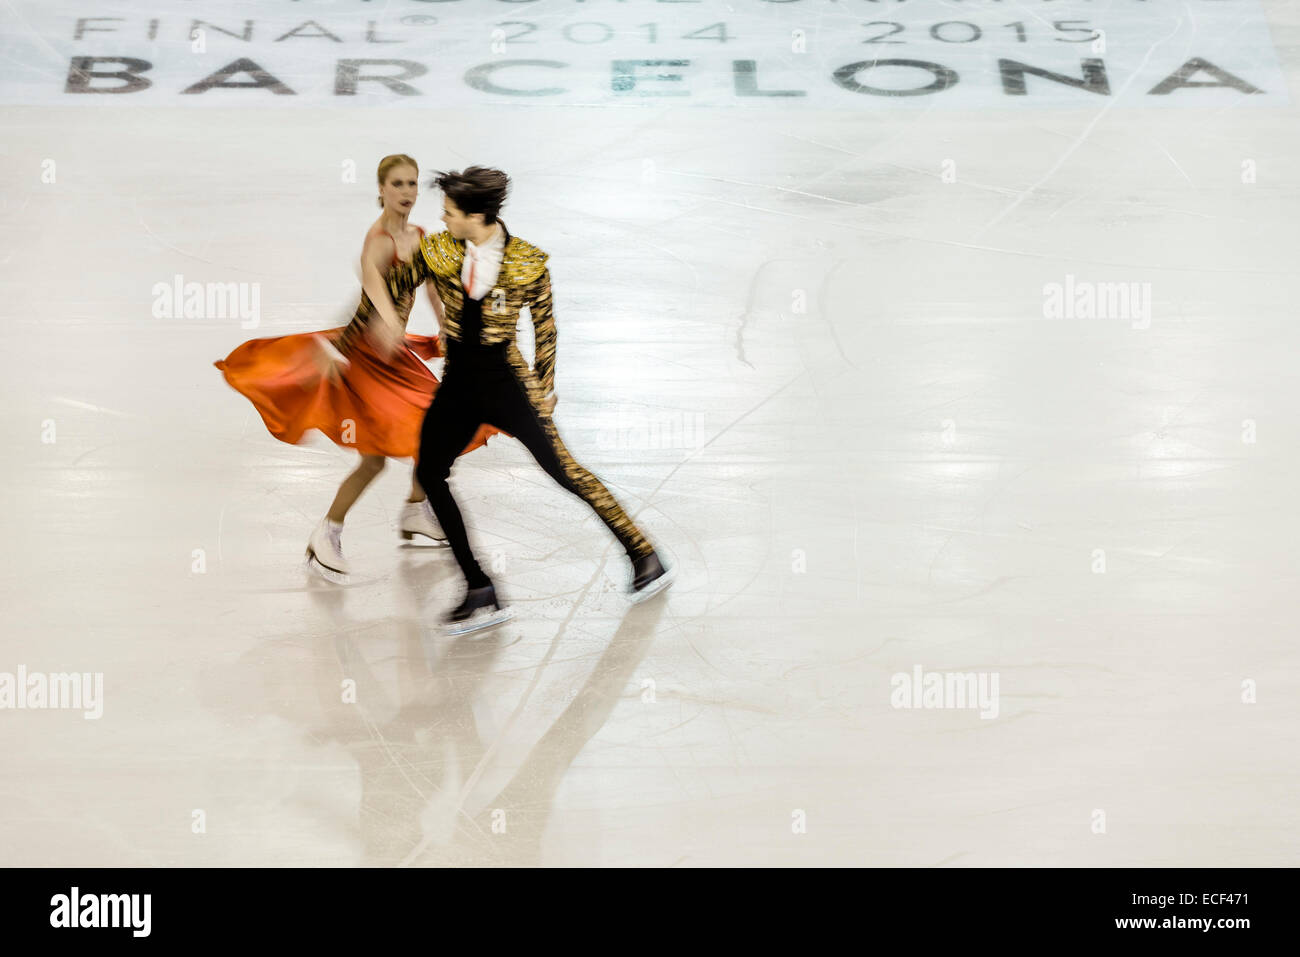 Kaitlyn Weaver / Andrew Poje (CAN) führen in der Tanz-SENIOR - Kurzprogramm bei der ISU Grand Prix of Figure Skating Finale in Barcelona Stockfoto